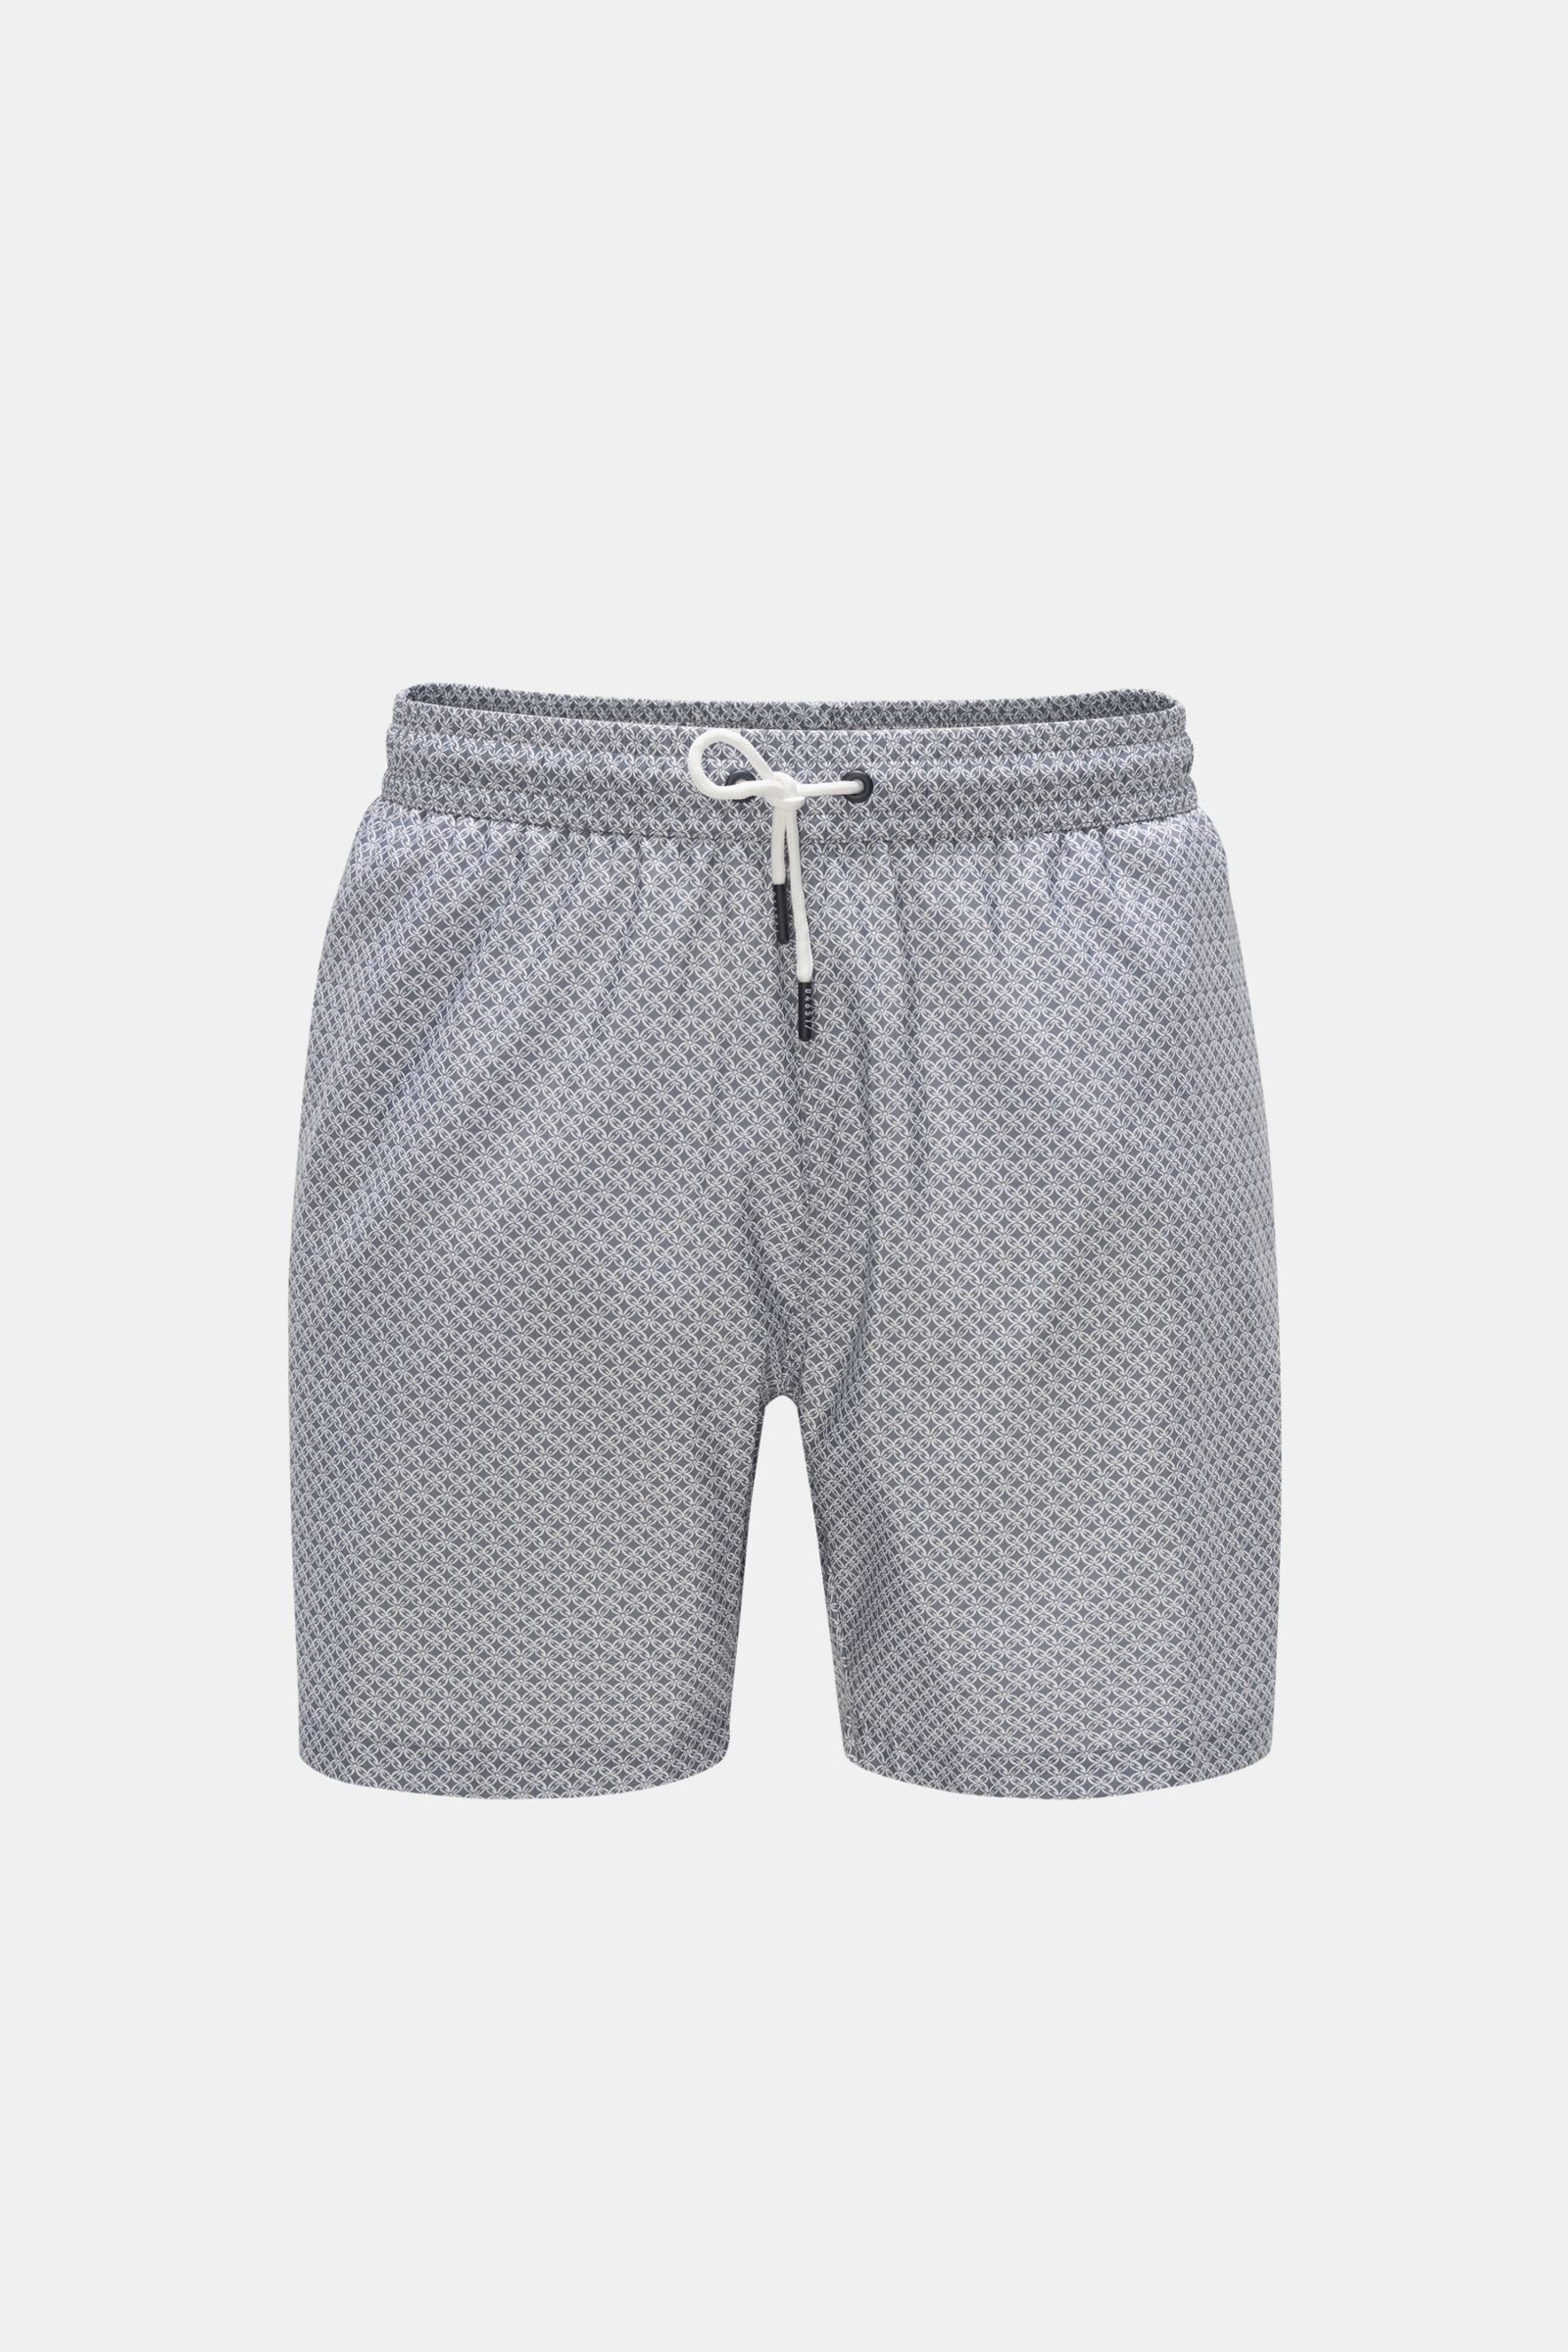 Swim shorts 'Tile Swim' grey/white patterned